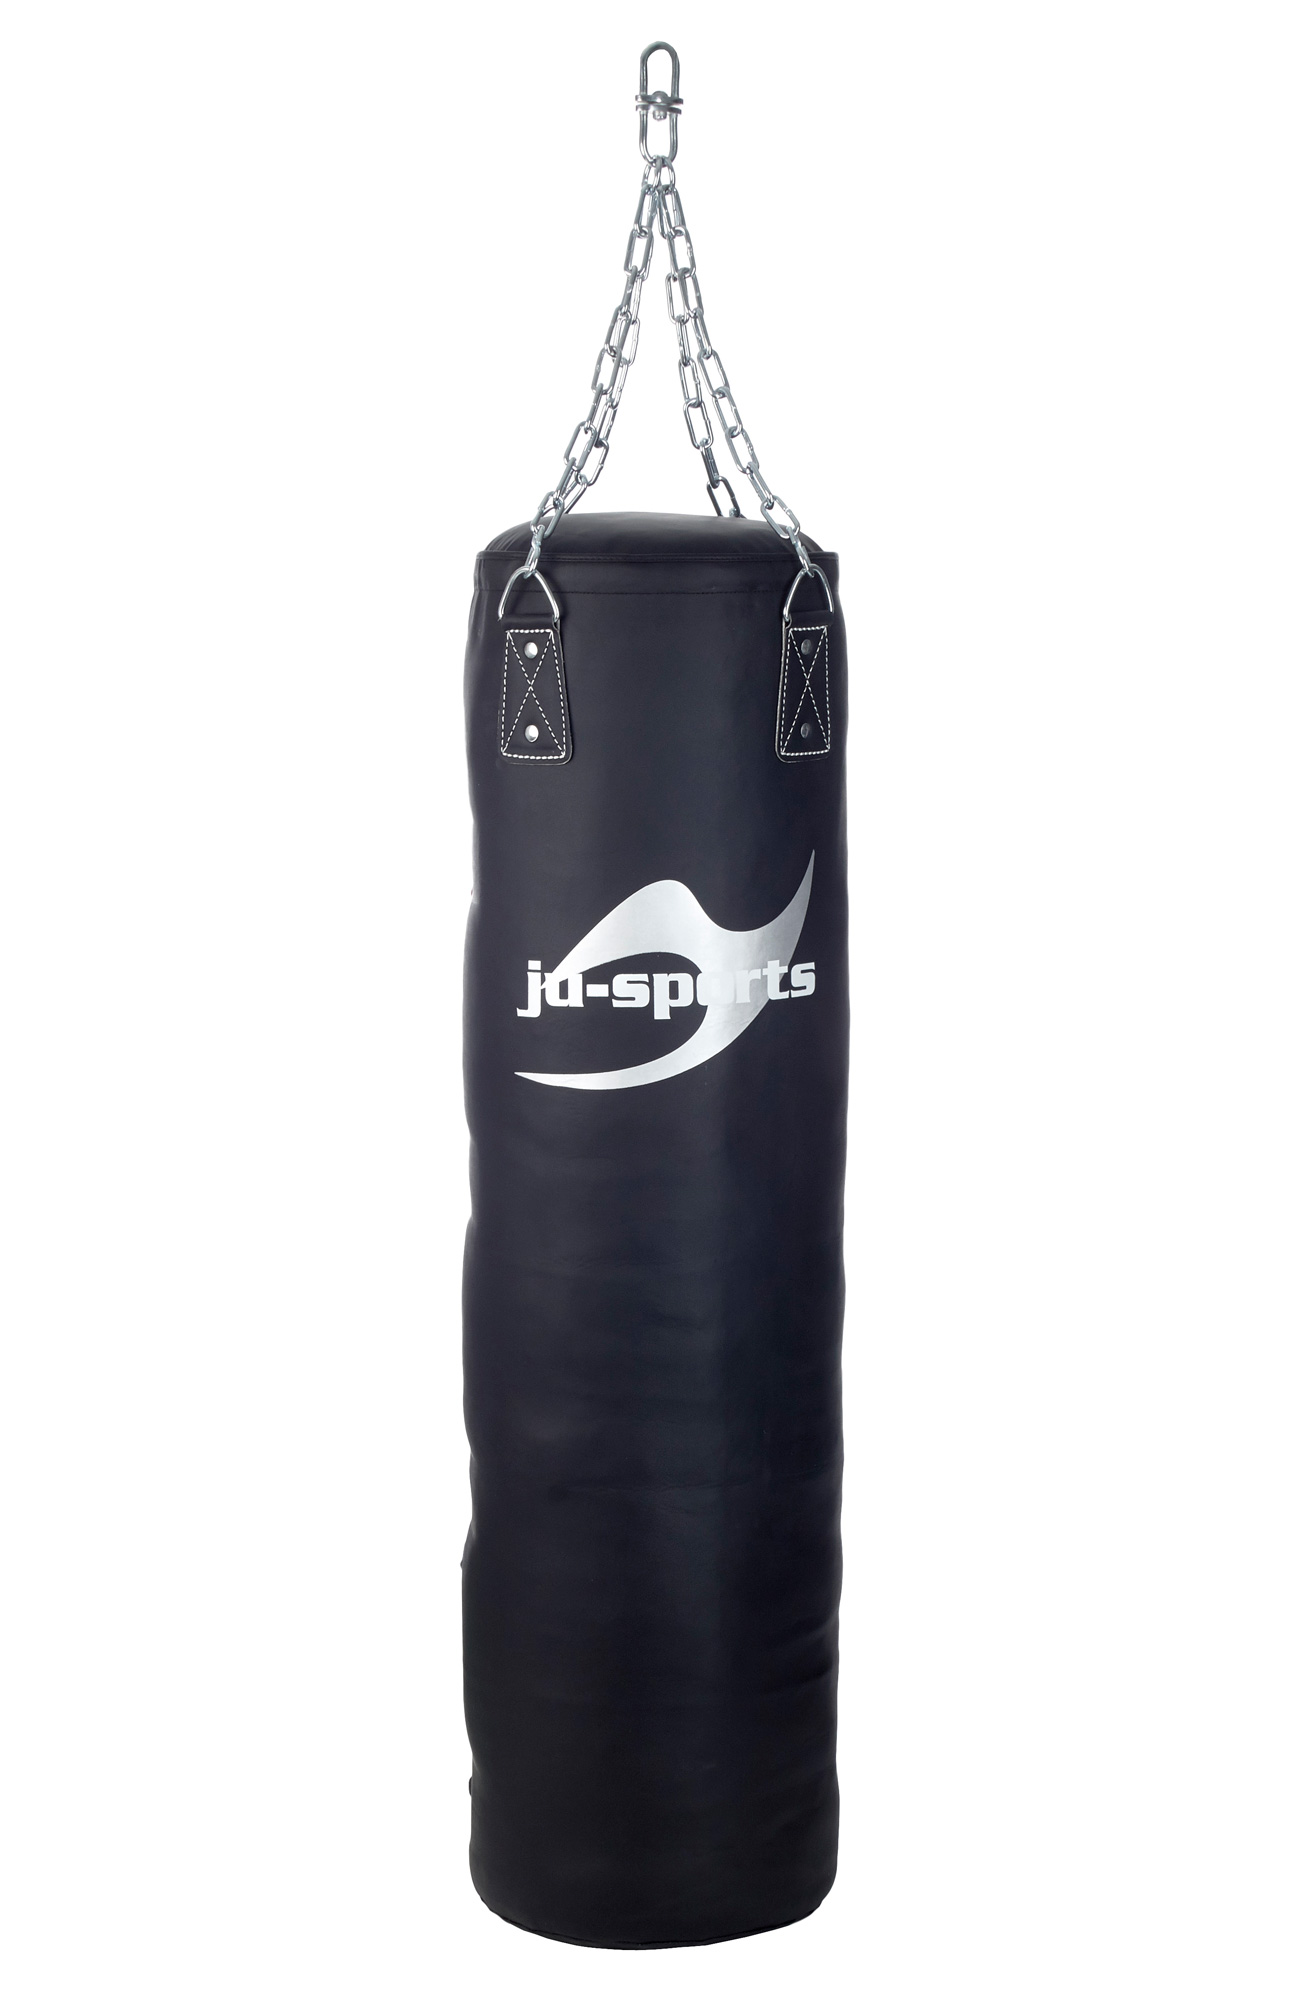 Ju-Sports Punching Bag PU filled